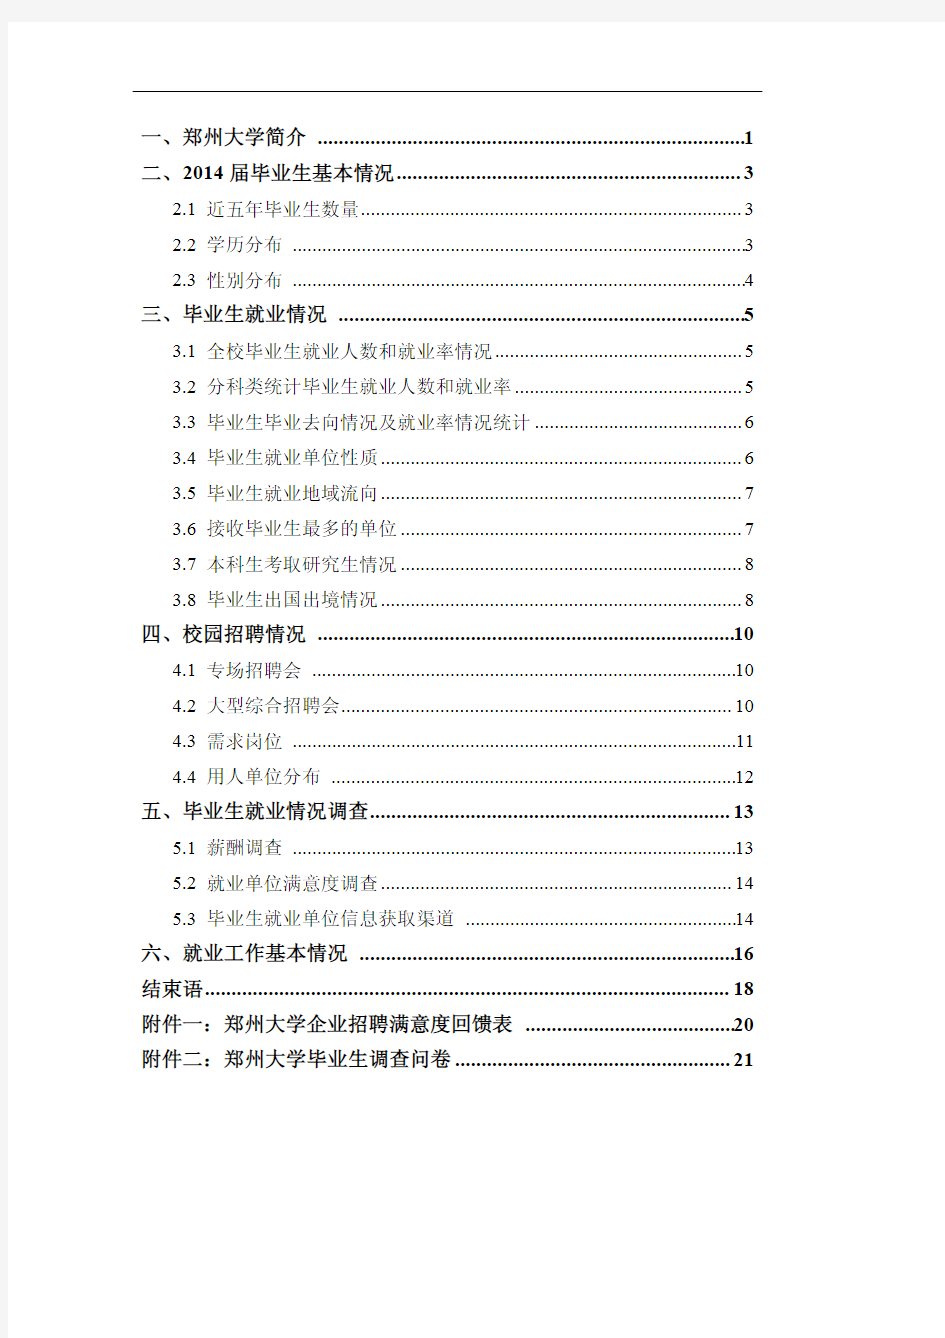 【VIP专享】郑州大学2014届毕业生就业质量报告